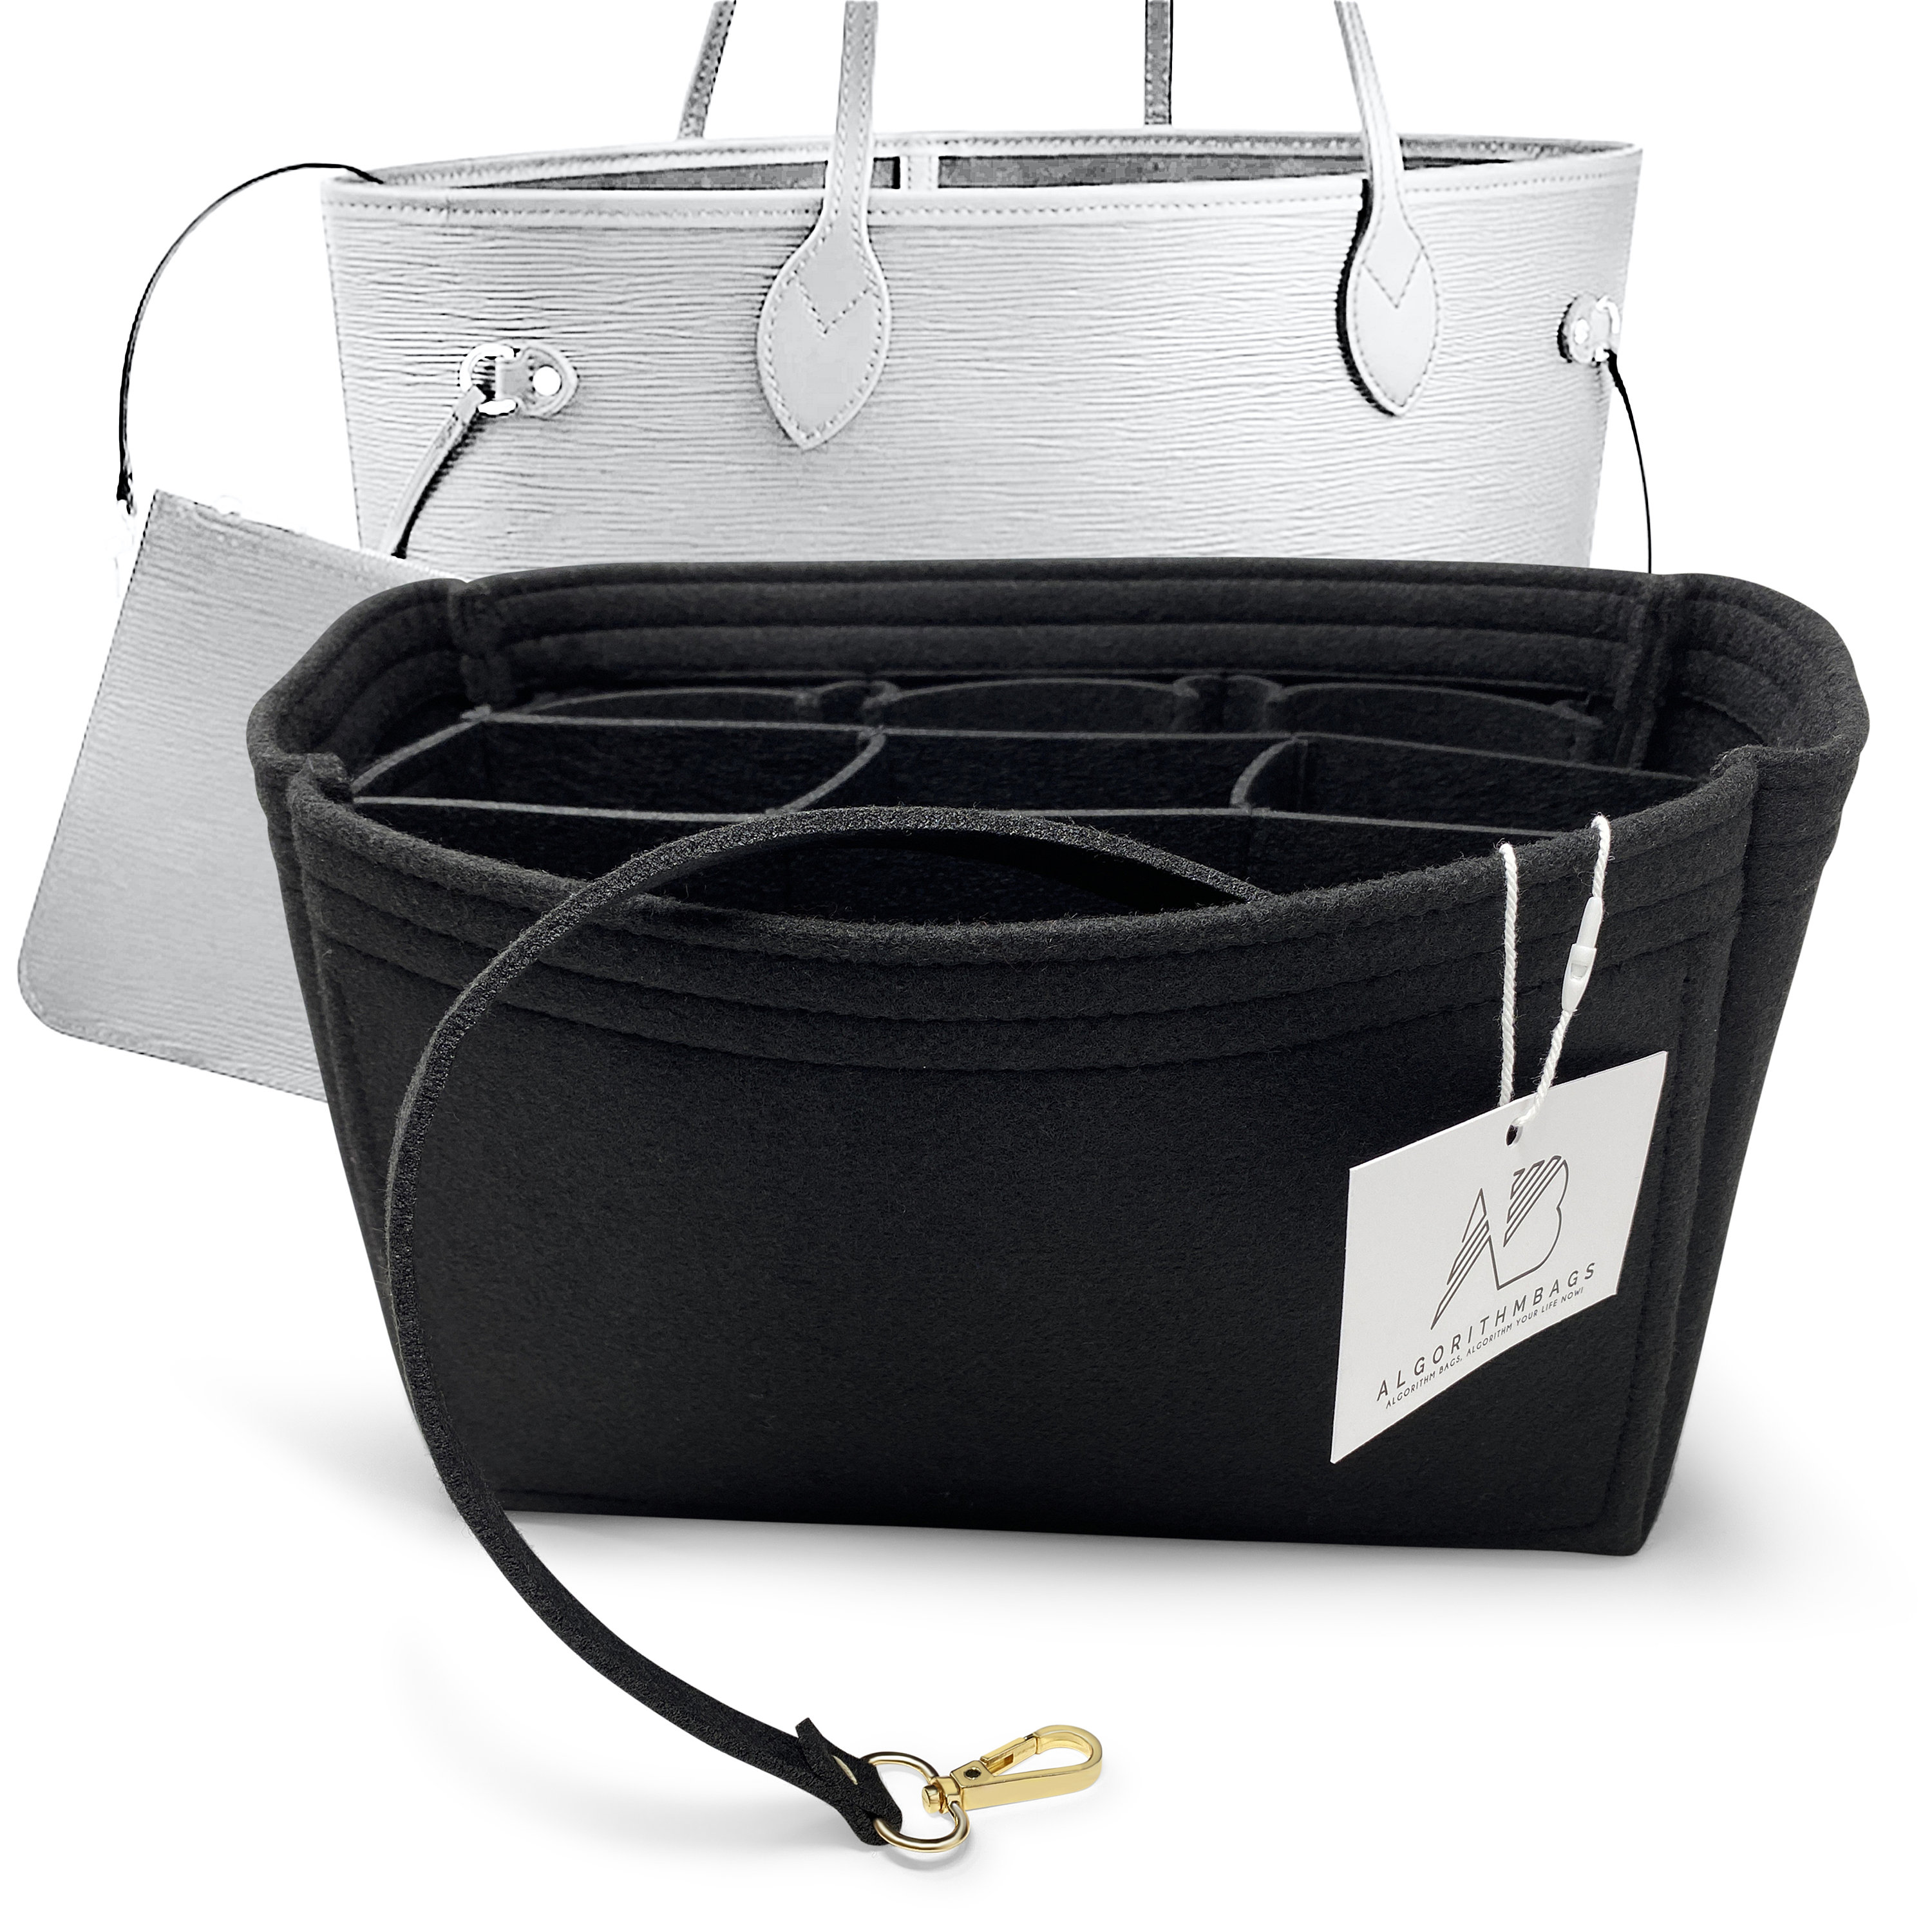 Soft andLight】Bag Organizer Insert For Lv Neverfull GM MM PM Bucket  Organiser Divider Shaper Protector Compartment Inner Lining - AliExpress